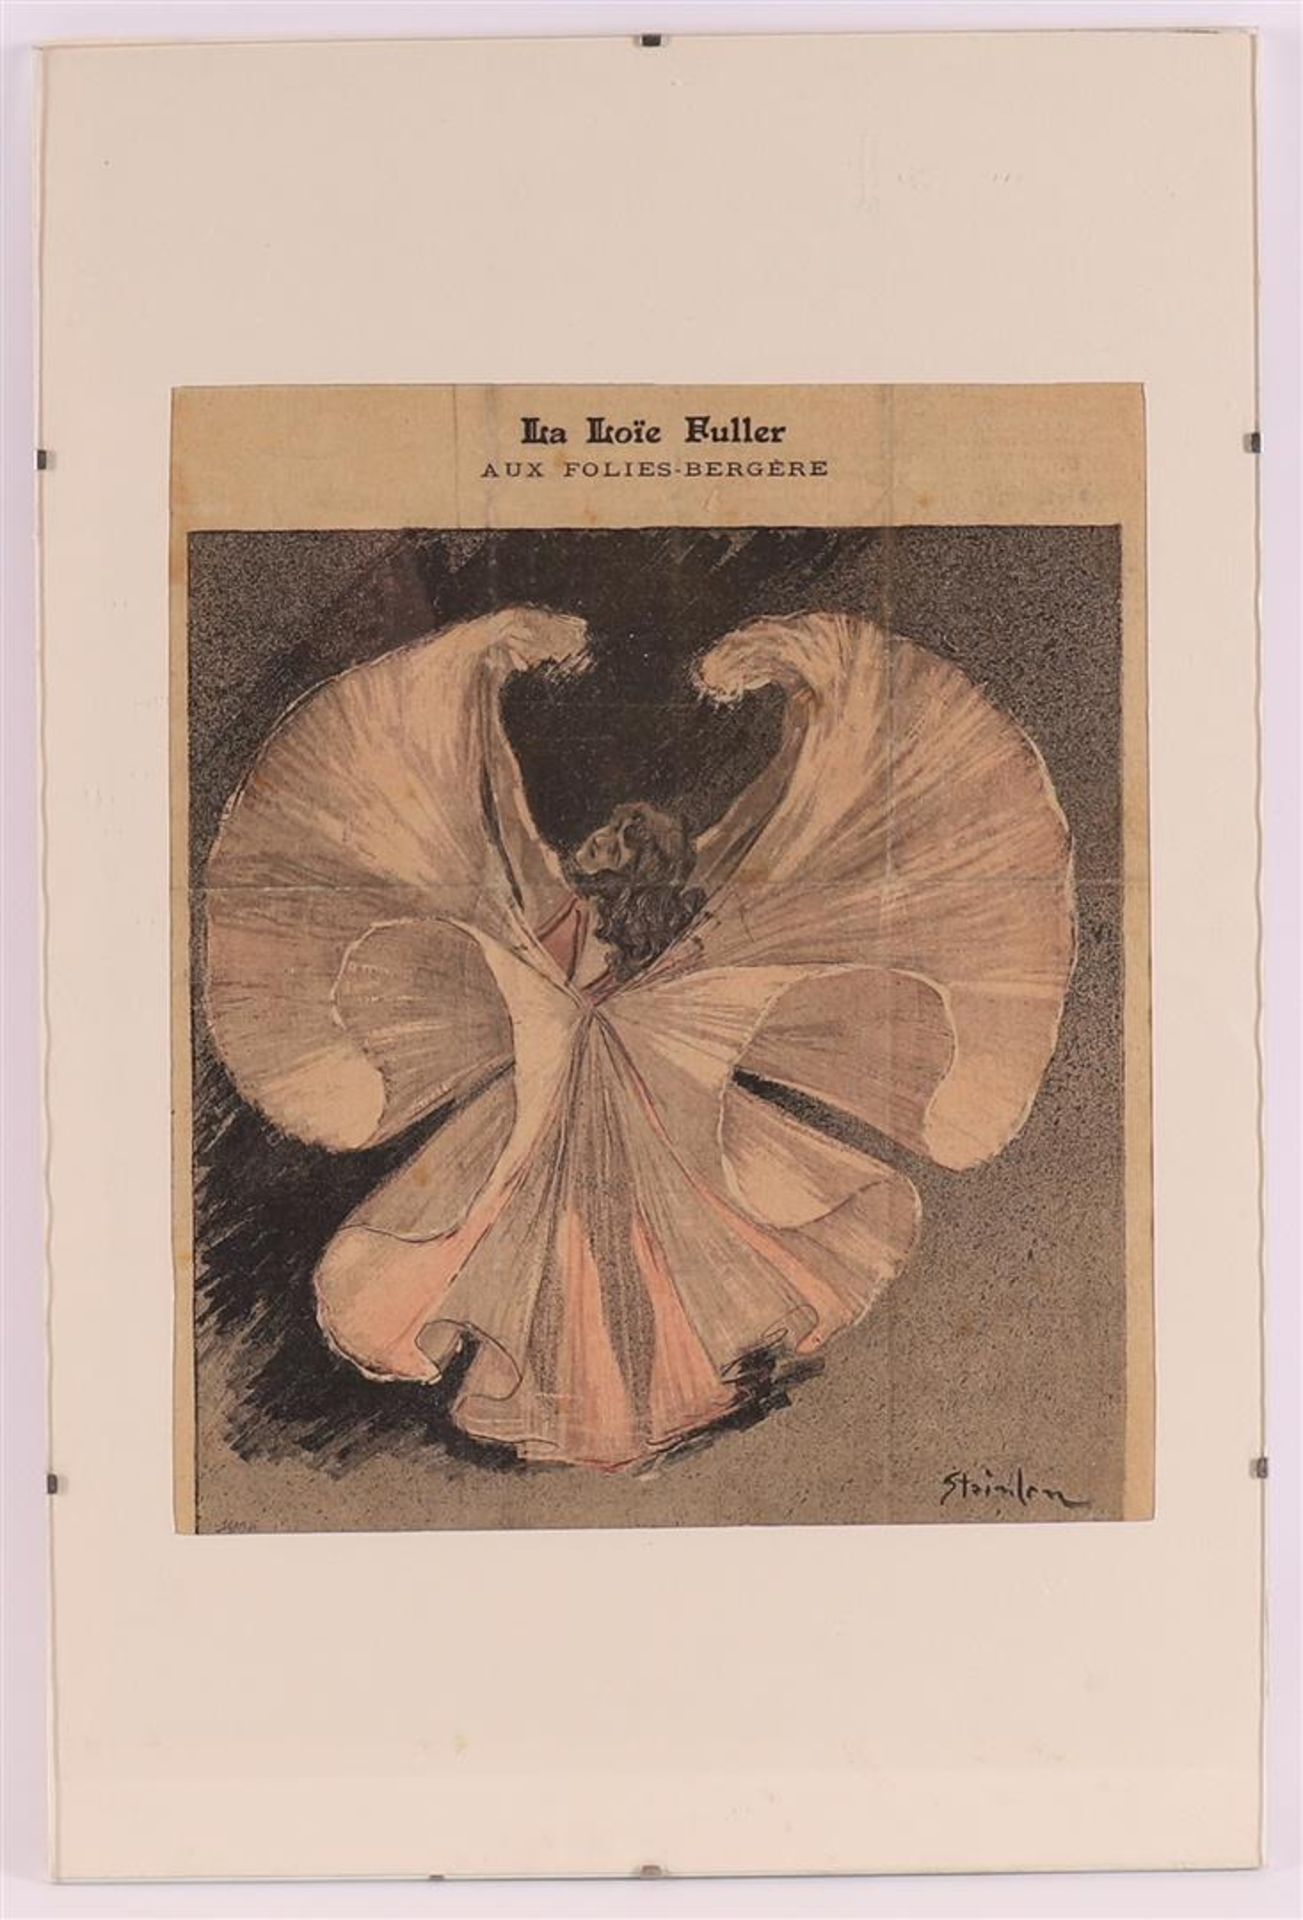 Steinlen, Theophile "Loie Fuller", litho/paper, h 27 x w 23 cm.